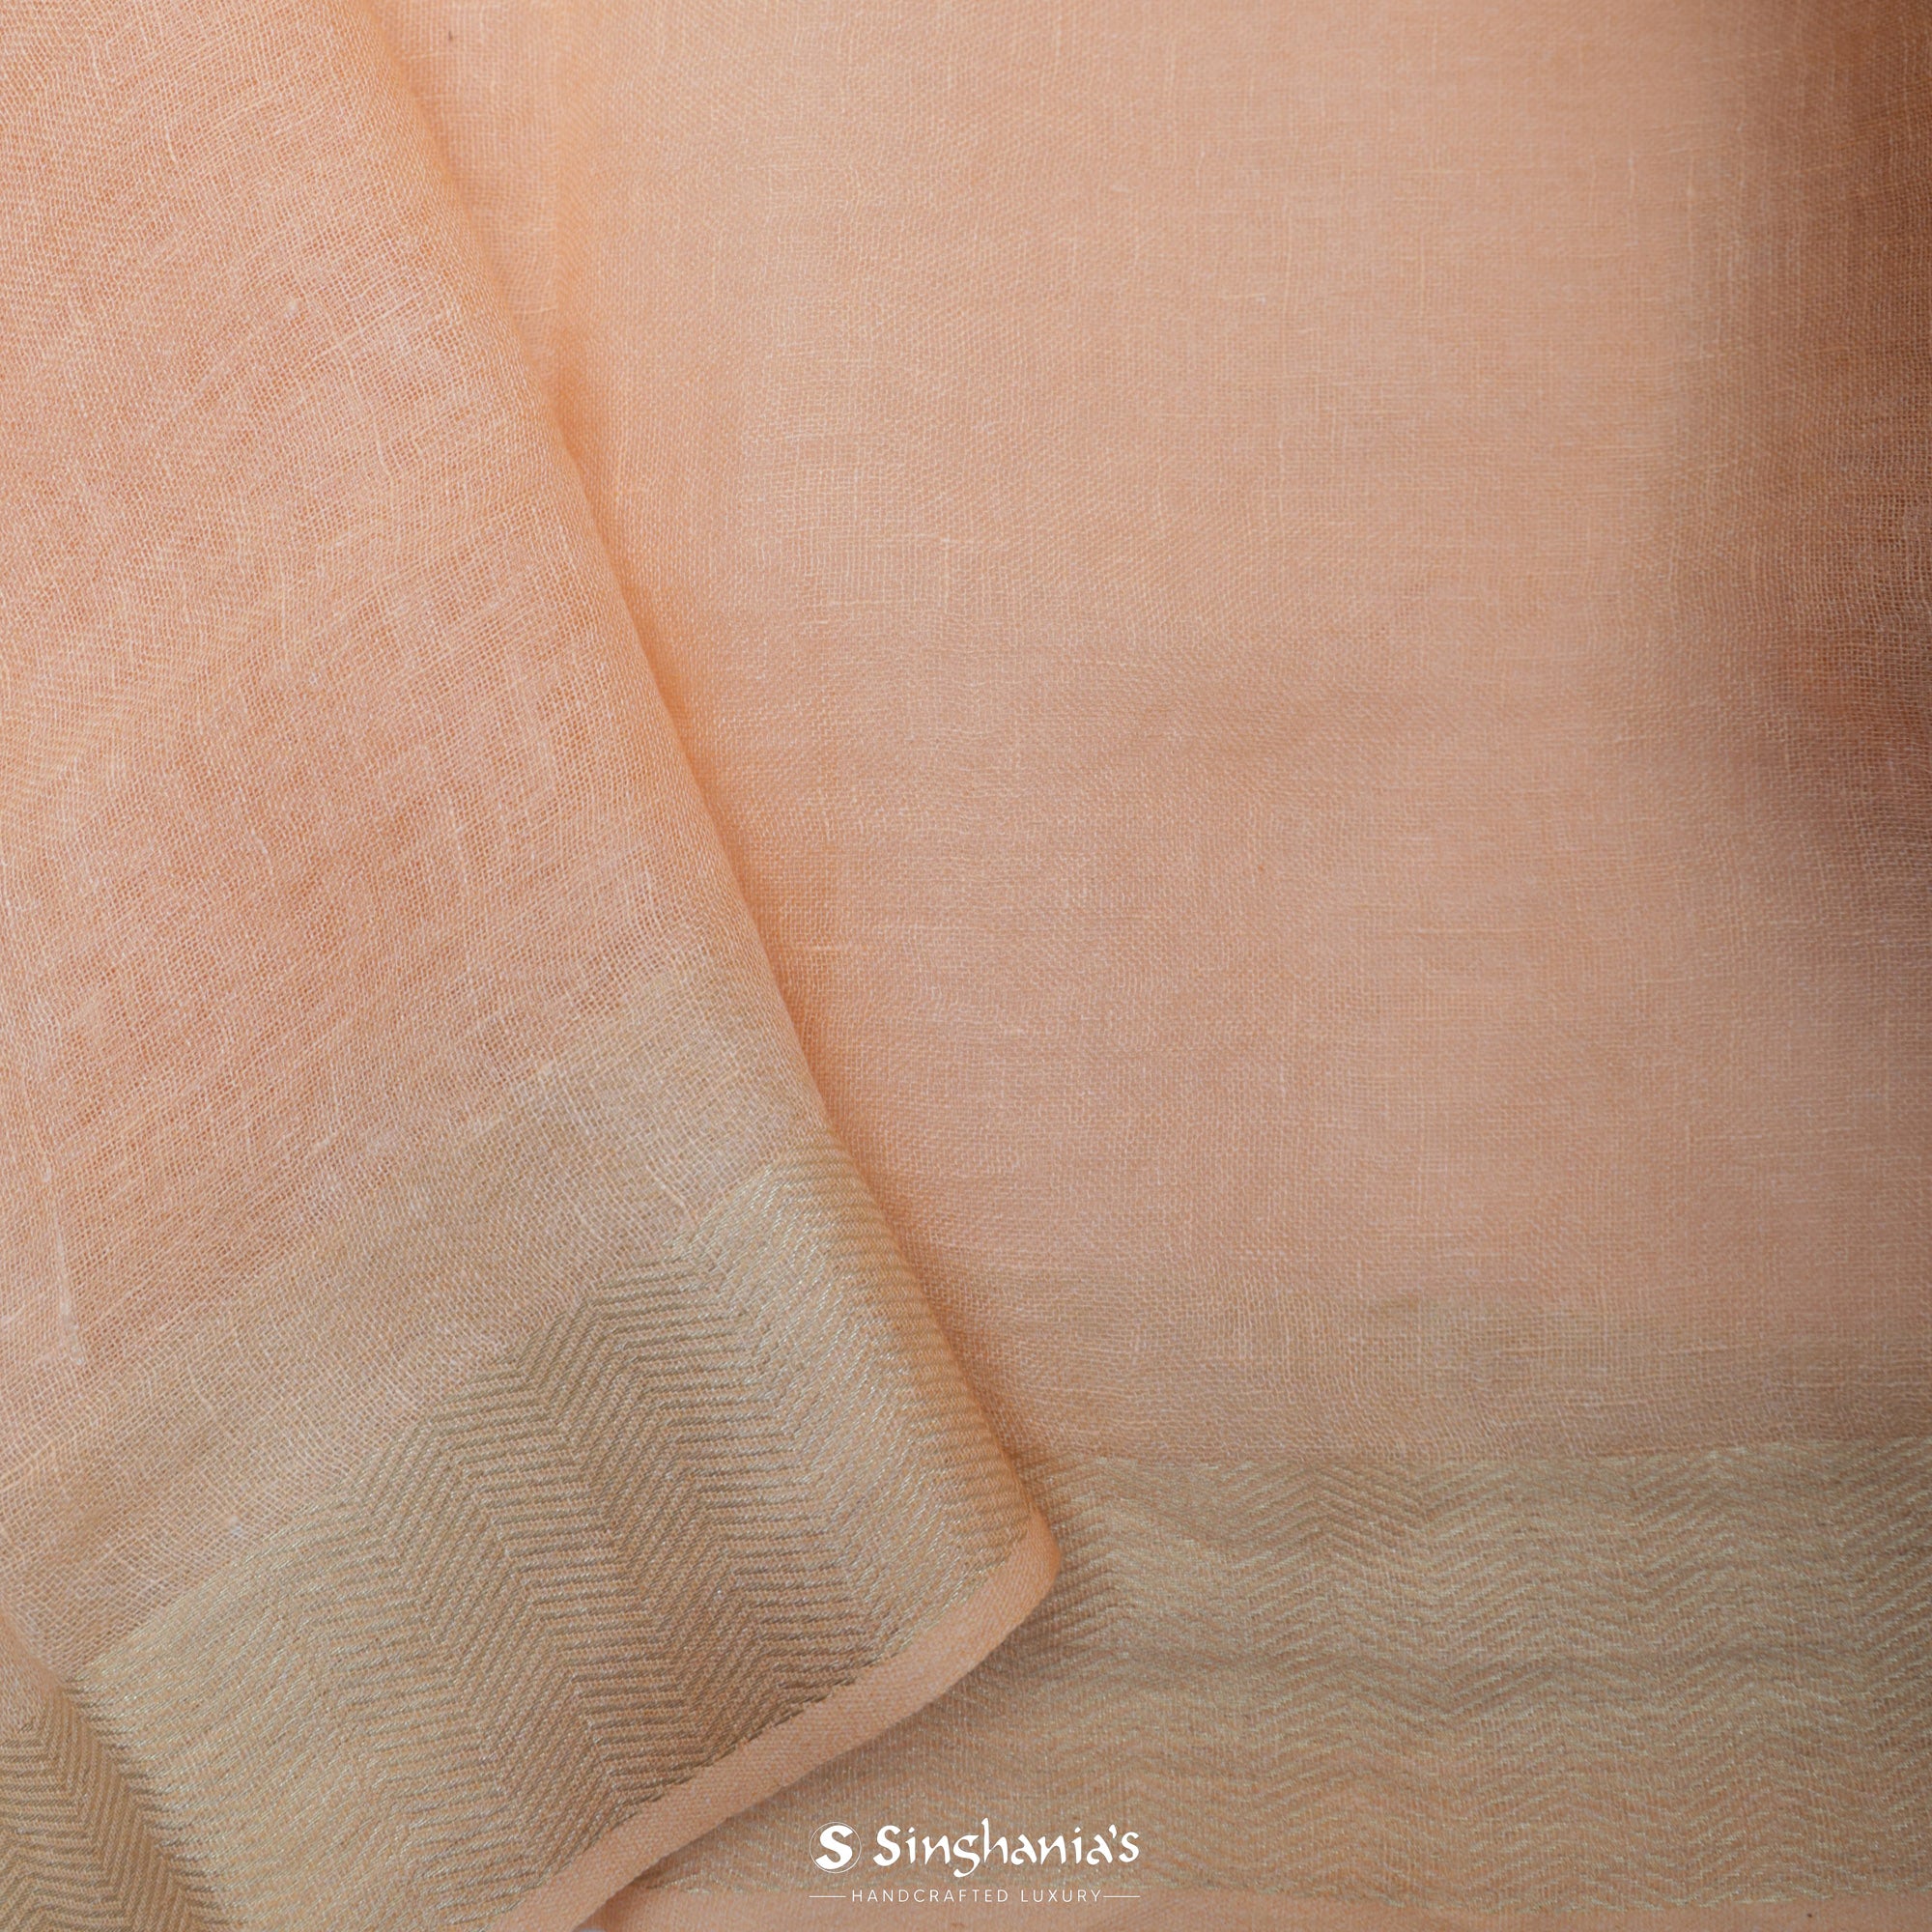 Malibu Peach Printed Linen Saree With Floral Jaal Design